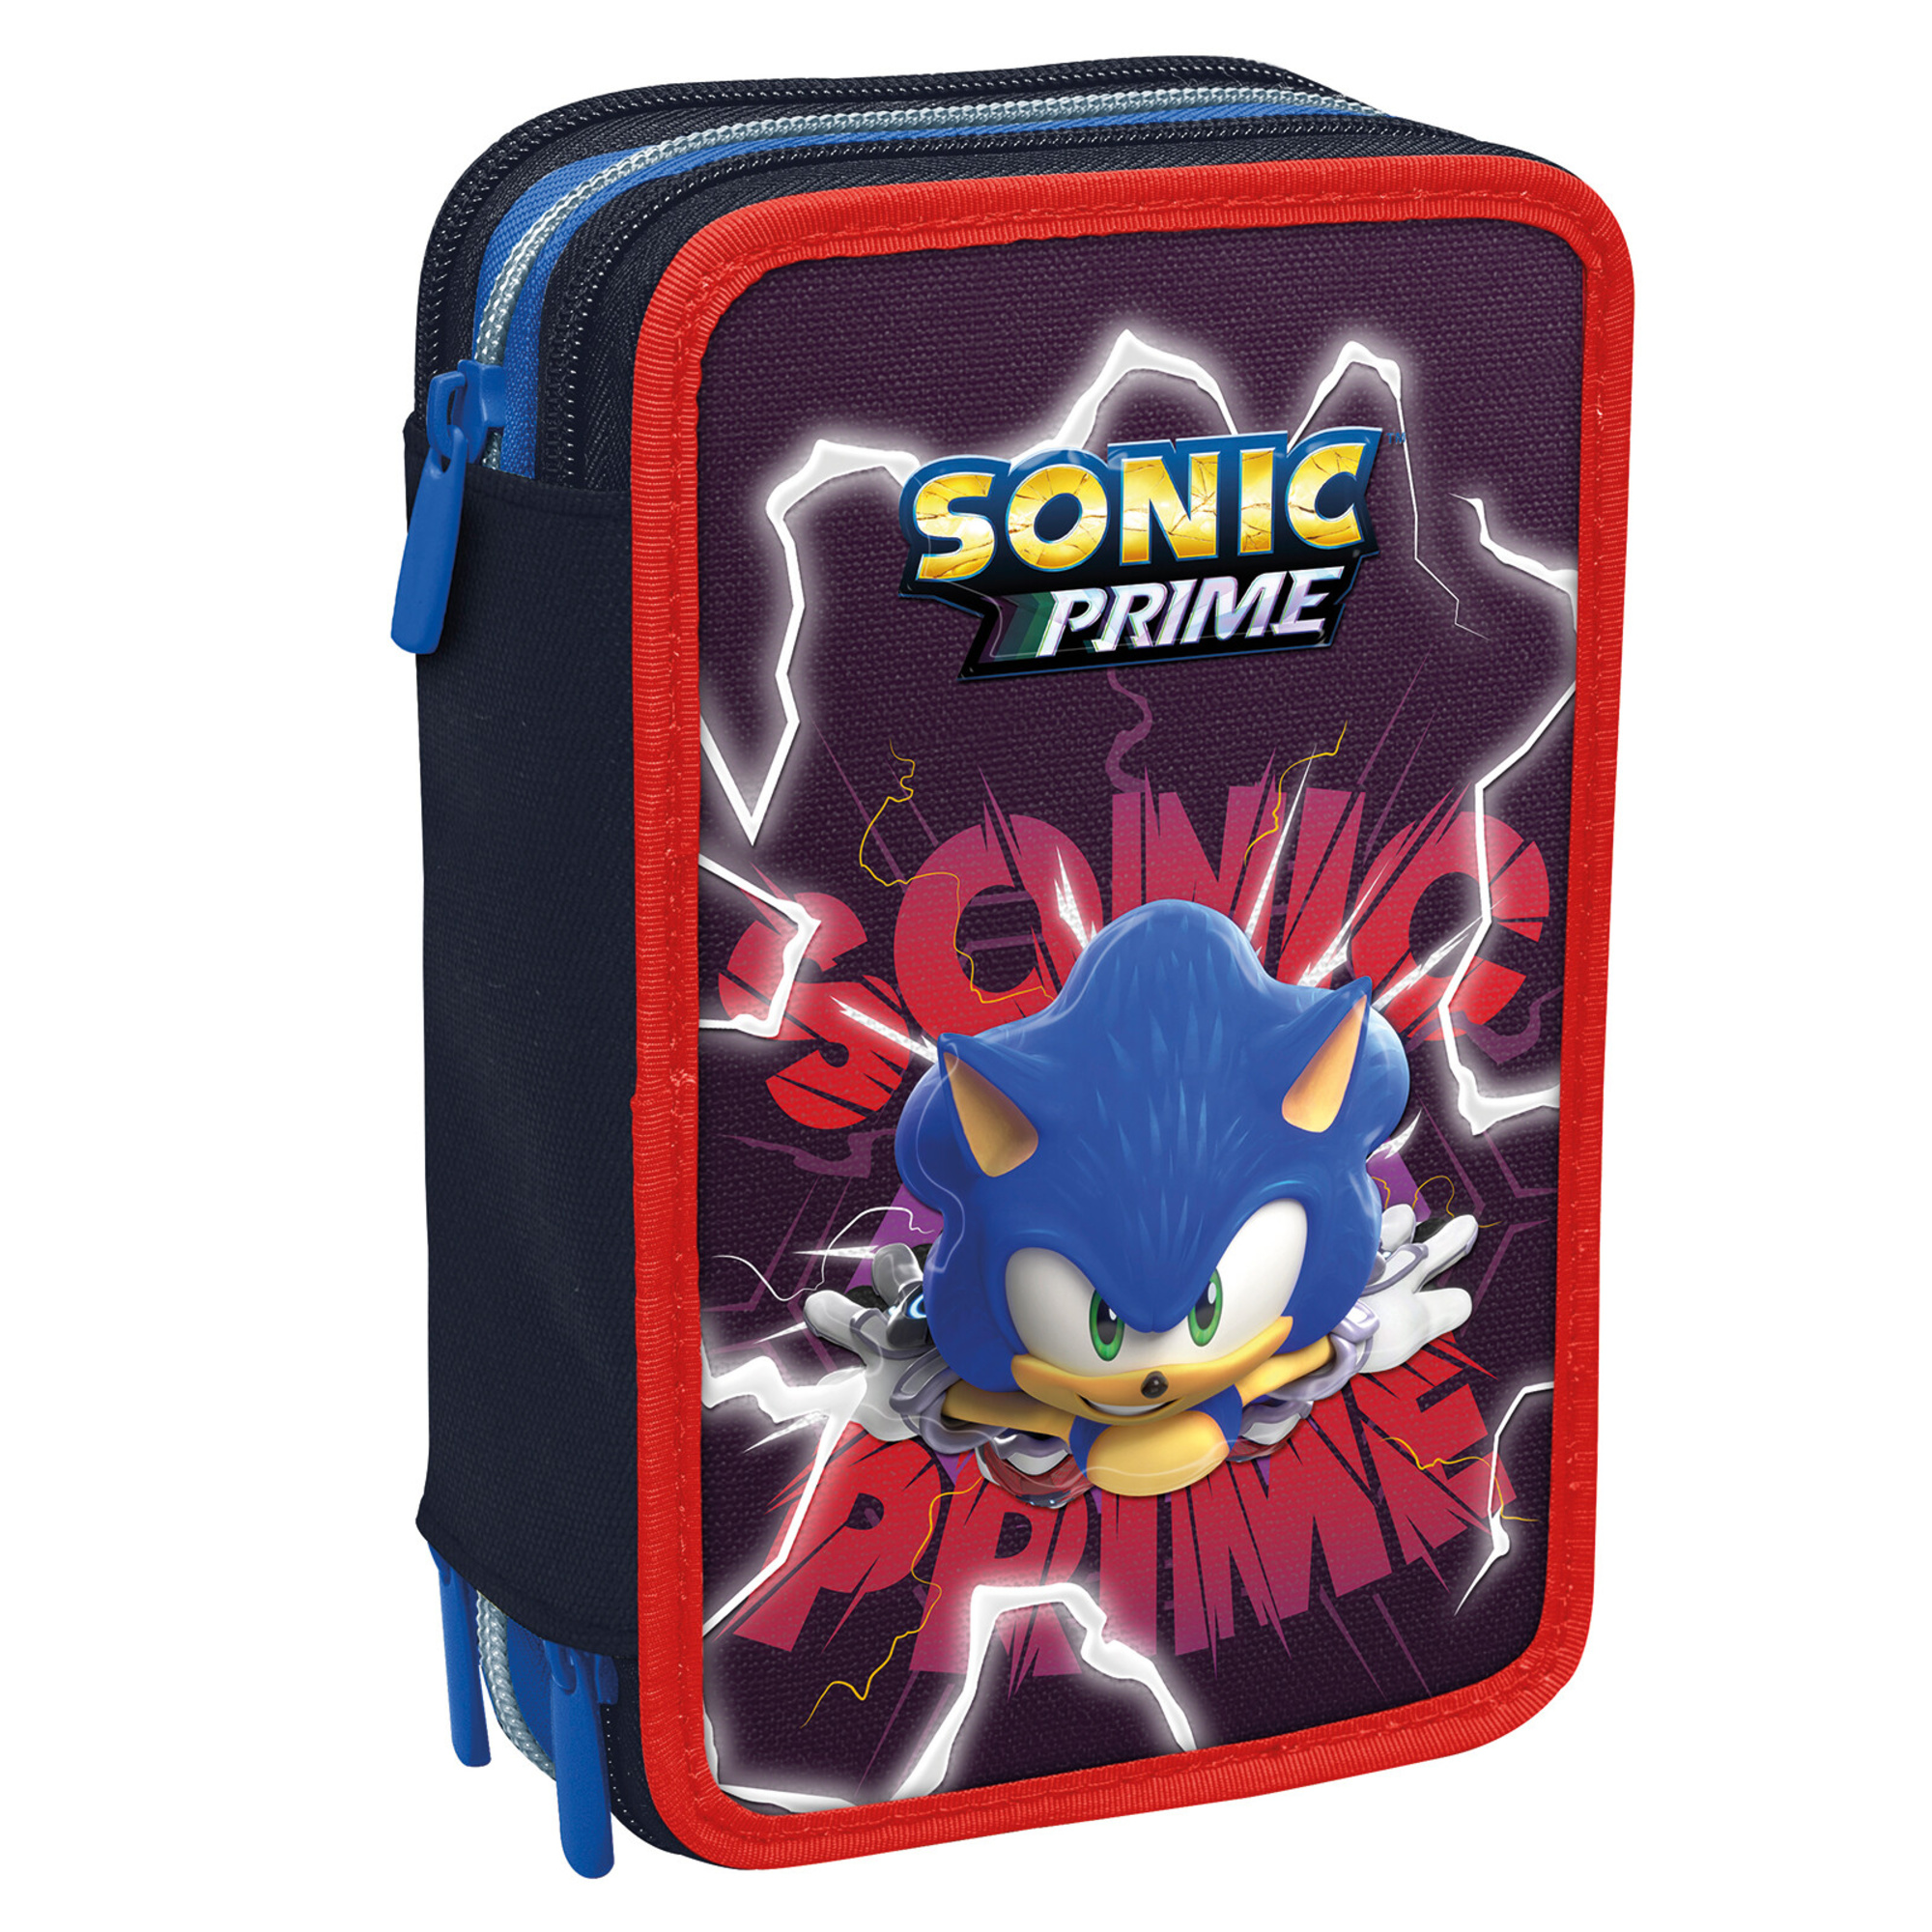 Astuccio 3zip sonic prime - sonic prime - Sonic